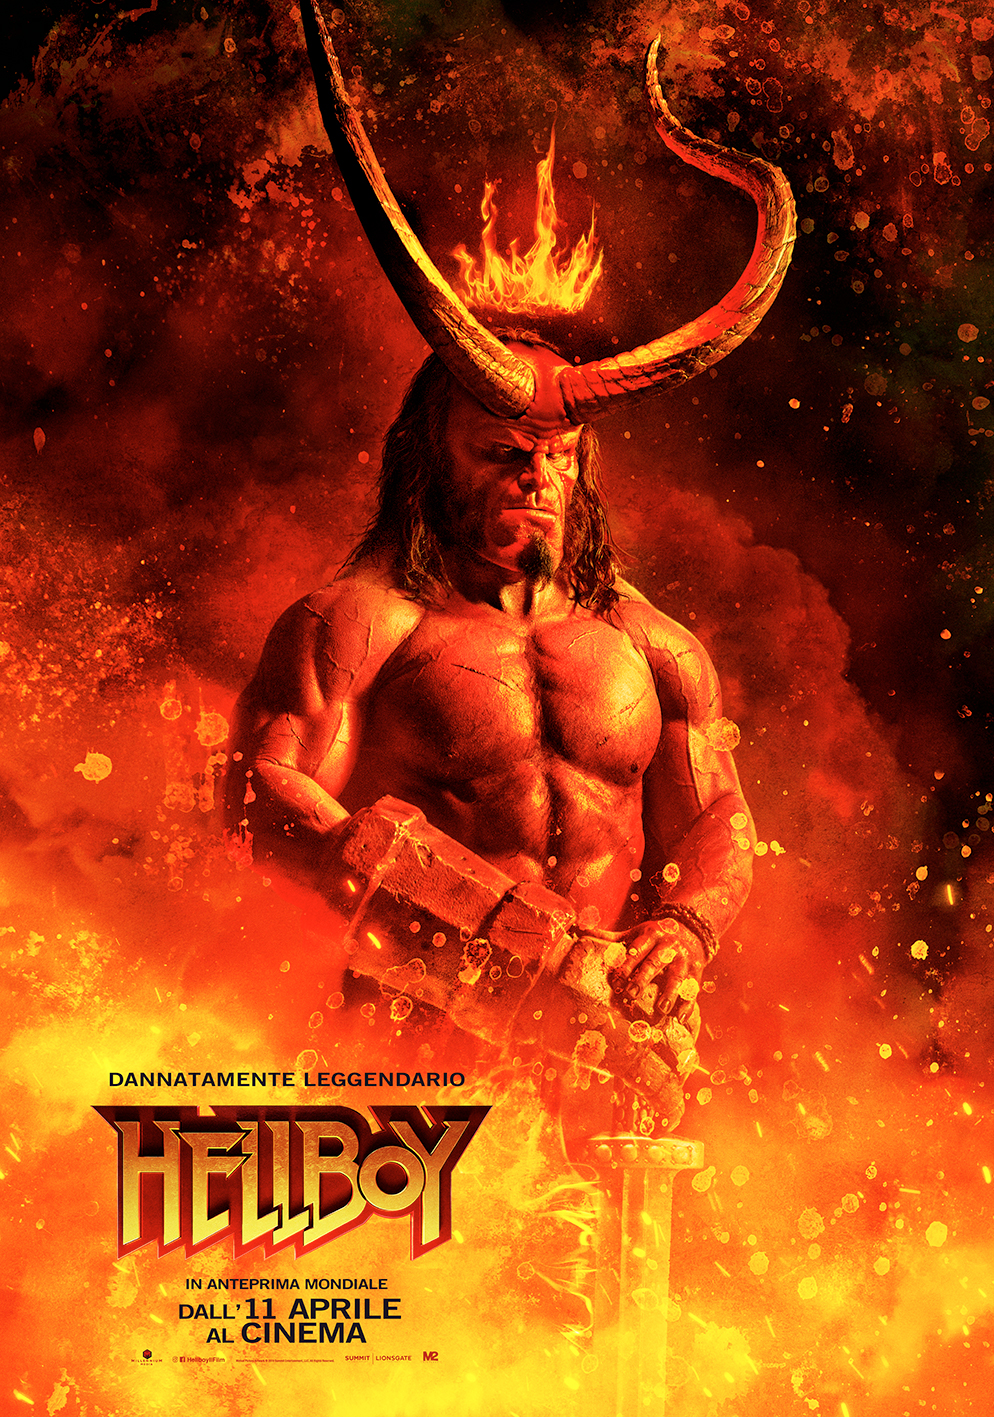 Hellboy, nel nuovo poster promozionale.